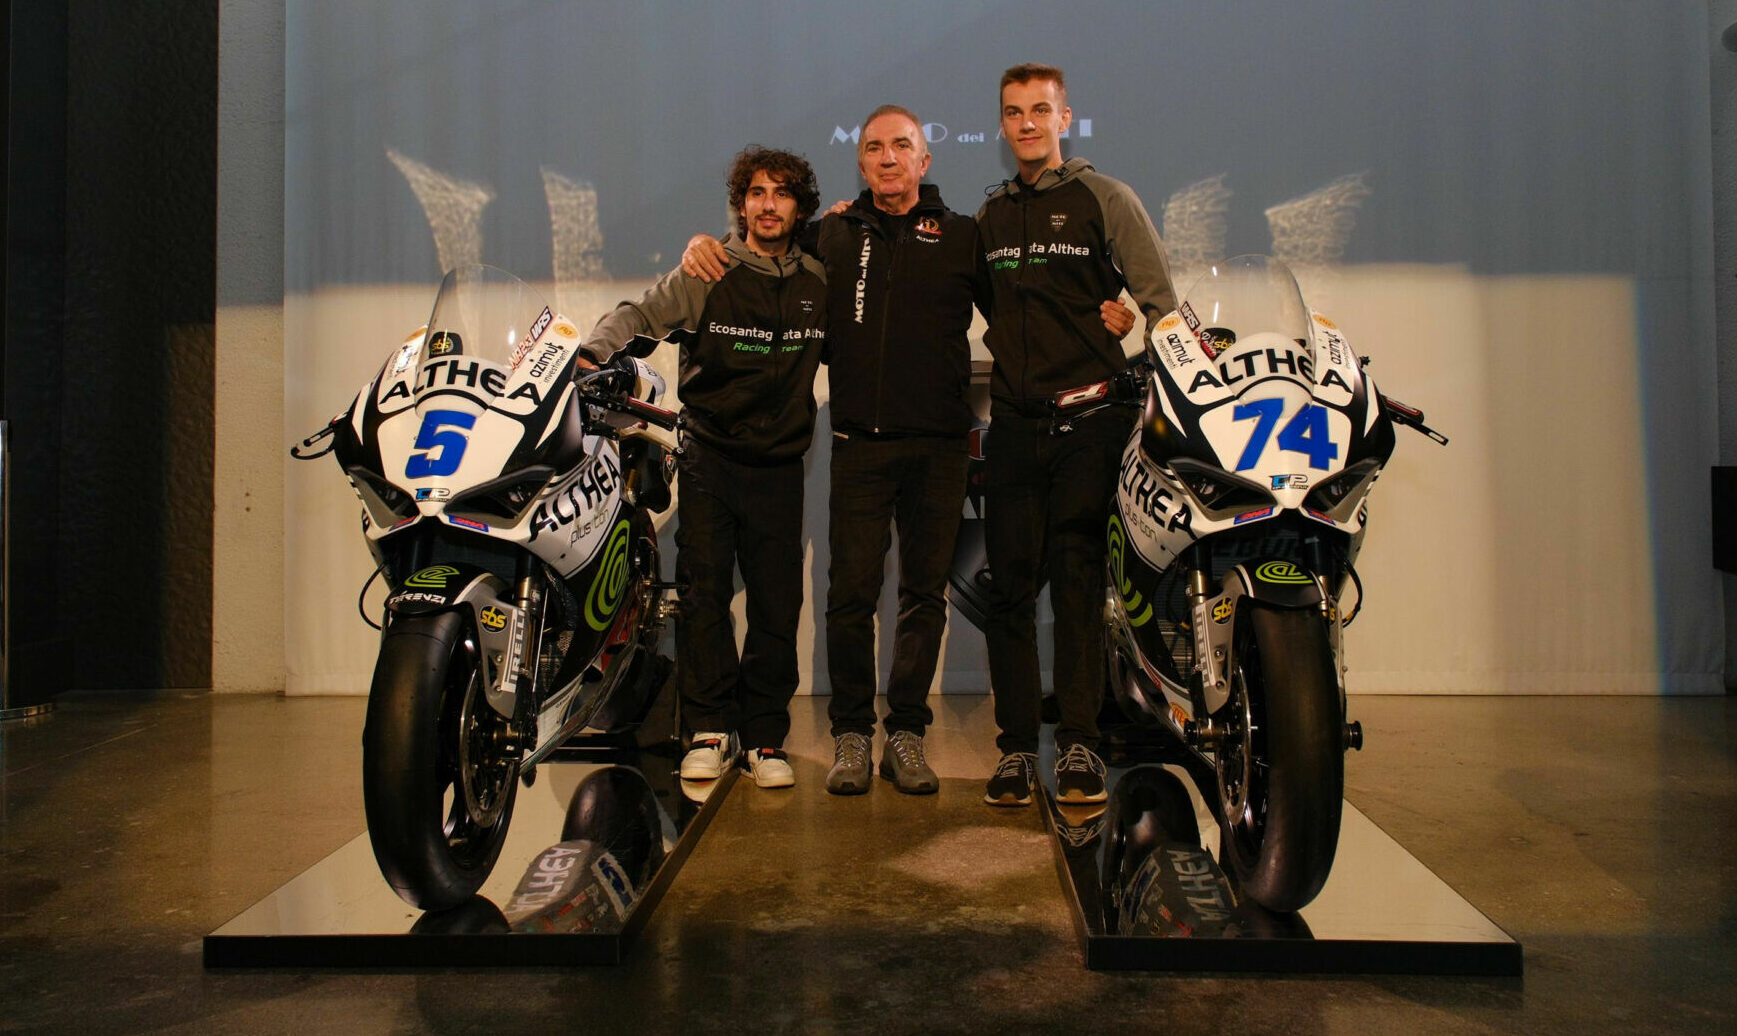 Riders Niccolò Antonelli (left) and Piotr Biesiekirski (right) with Althea Racing General Manager Genesio Bevilacqua (center). Photo courtesy Althea Racing.